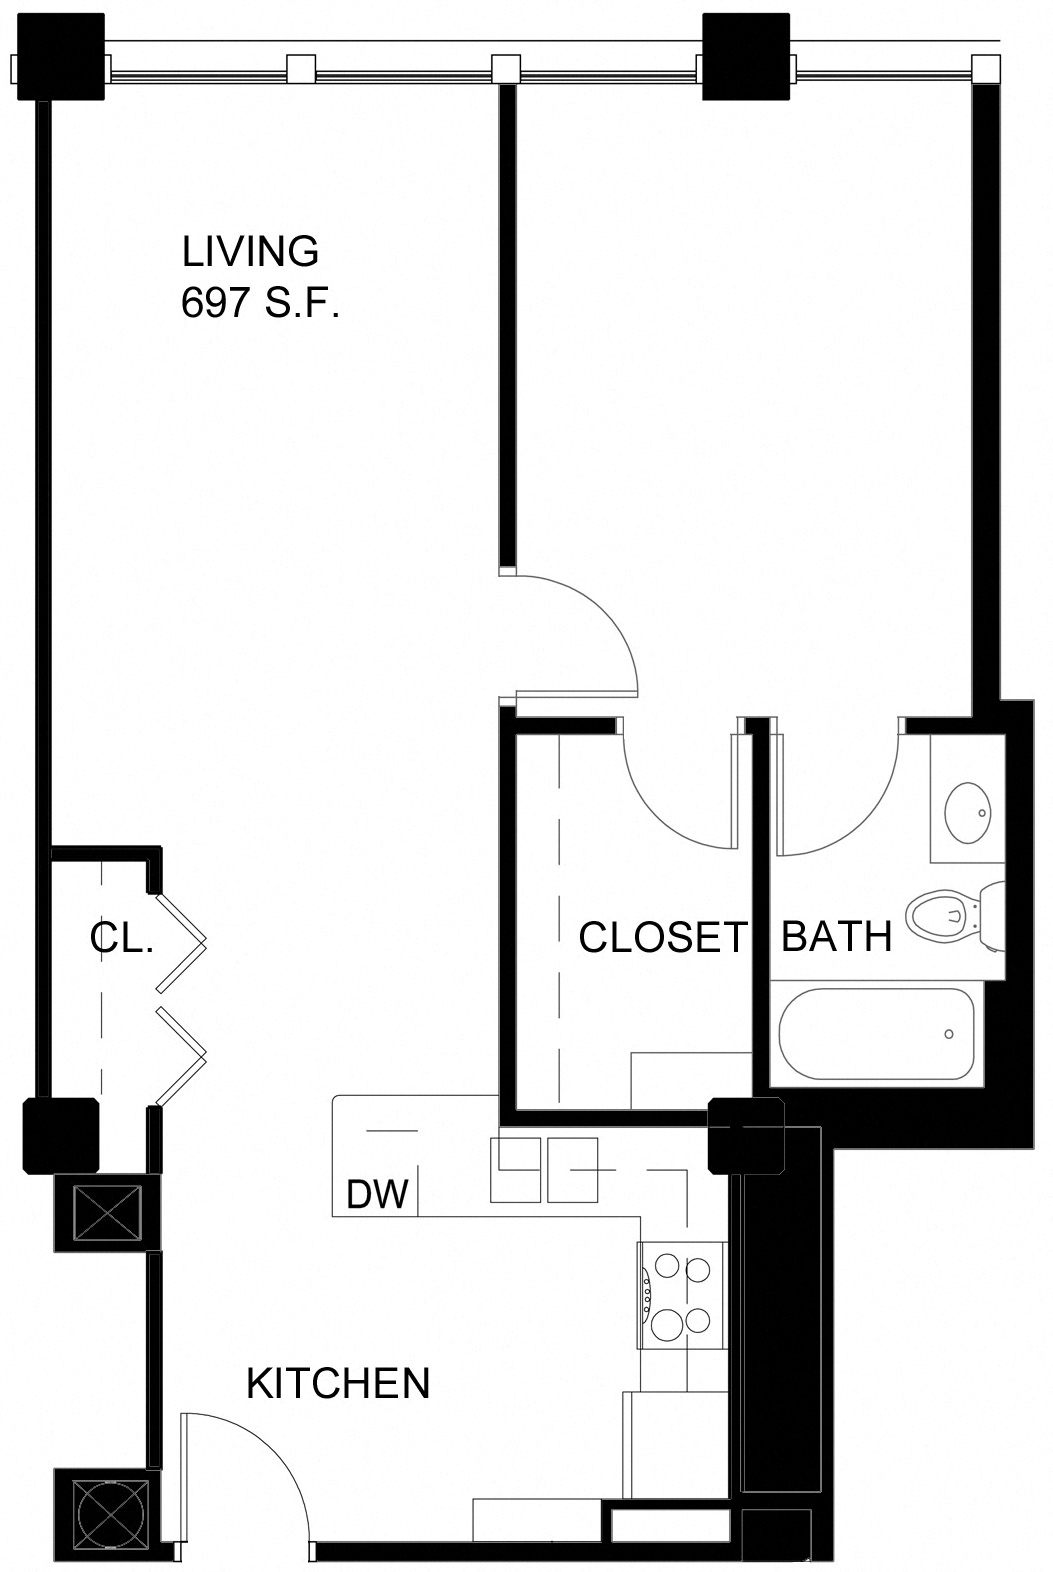 Floorplan for Apartment #P625B, 1 bedroom unit at Halstead Providence